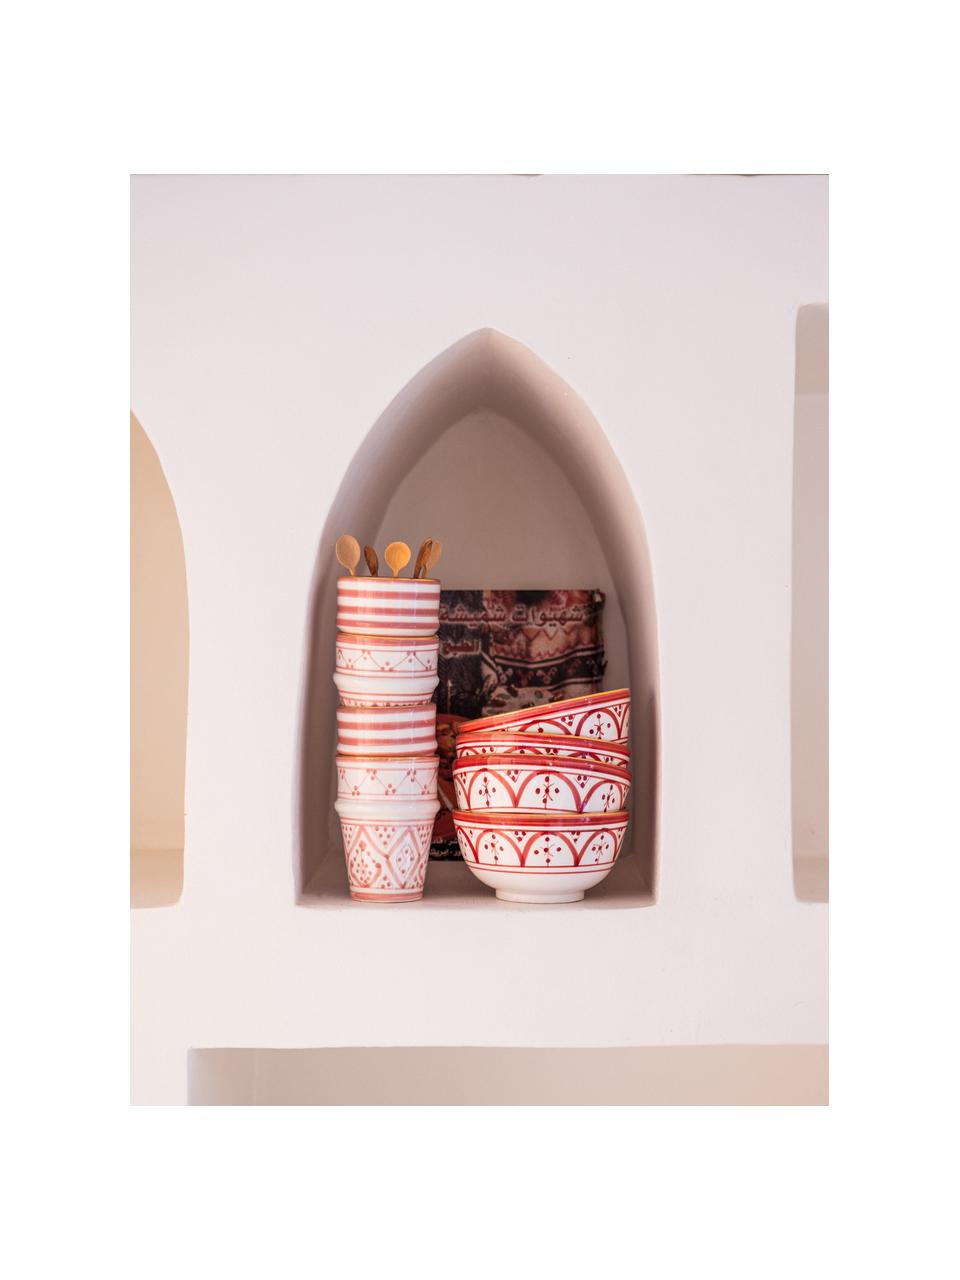 Cuenco artesanal Beldi, estilo marroquí, Cerámica, Naranja, crema, dorado, Ø 15 x Al 9 cm